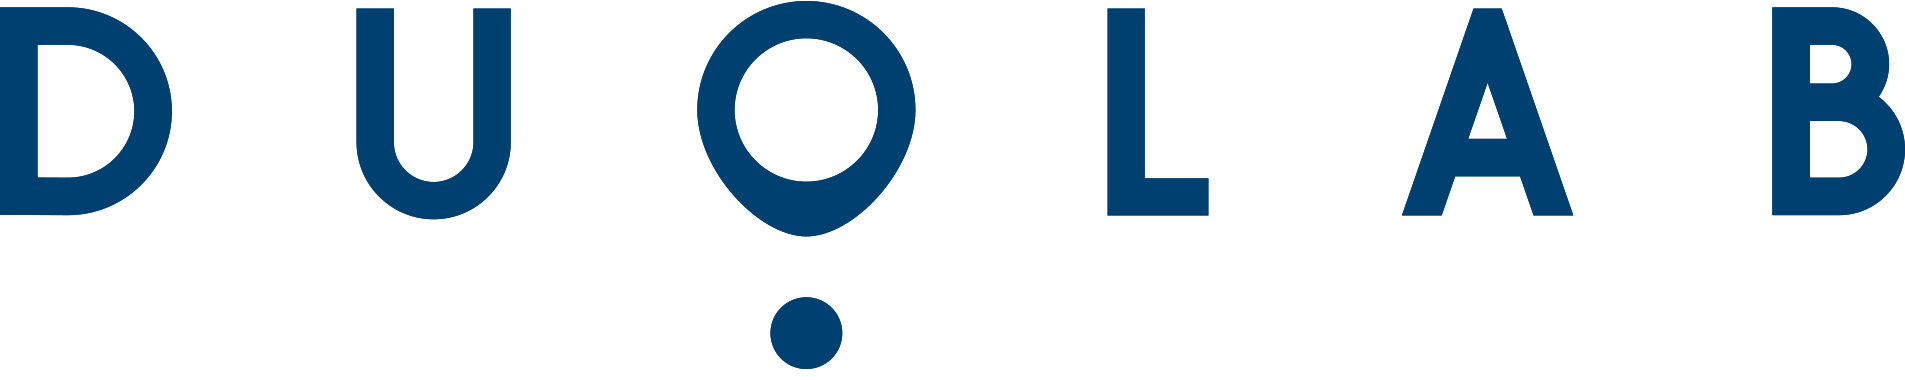 Duolab logo